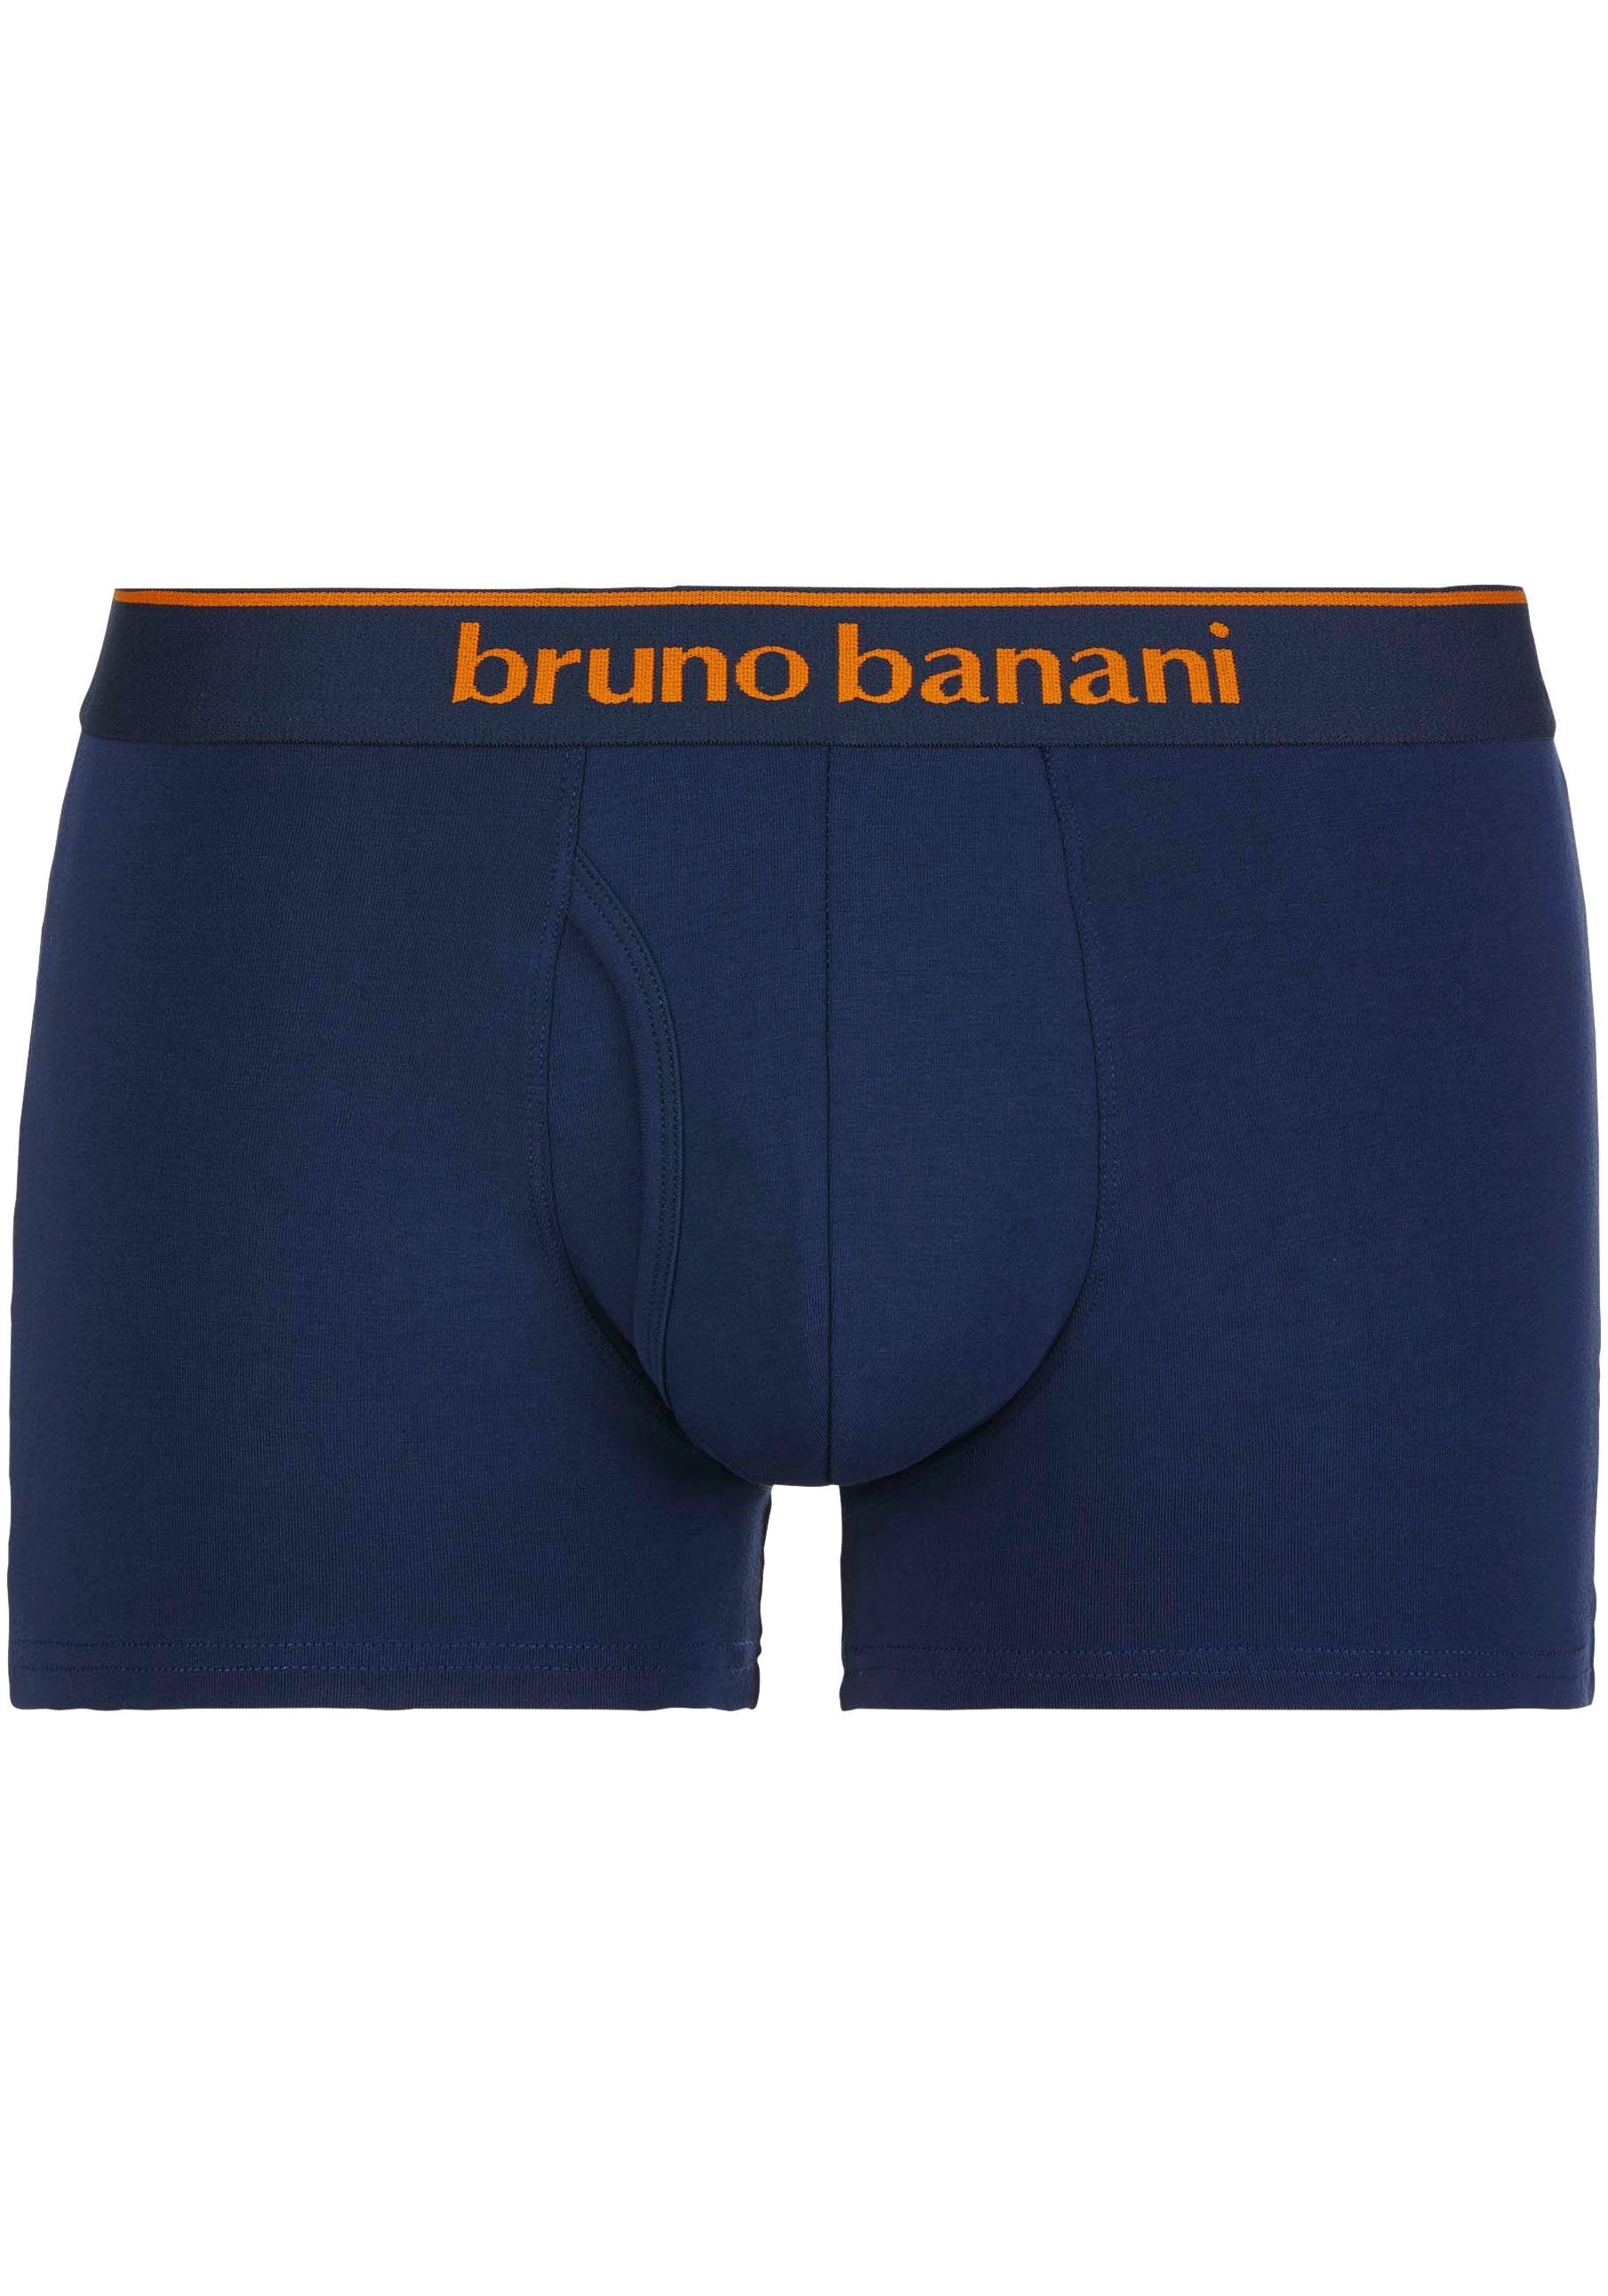 Bruno Banani Details blau-schwarz (Packung, Boxershorts Quick Access Short 2Pack Kontrastfarbene 2-St)